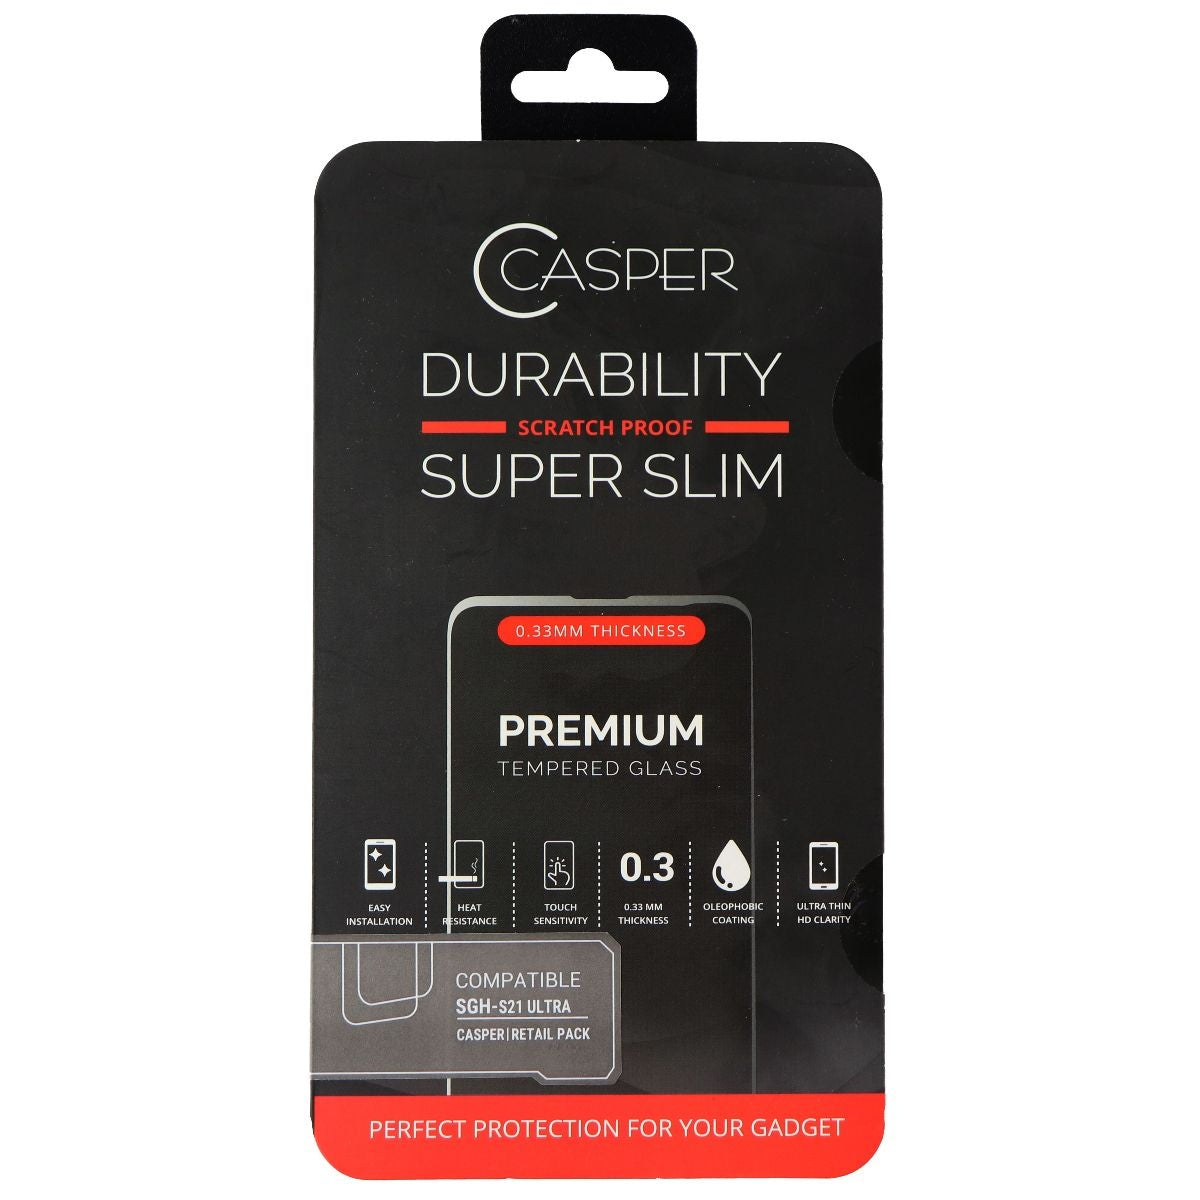 Casper Durability Series Slim Screen Protector for Samsung Galaxy S21 Ultra Cell Phone - Screen Protectors Casper    - Simple Cell Bulk Wholesale Pricing - USA Seller